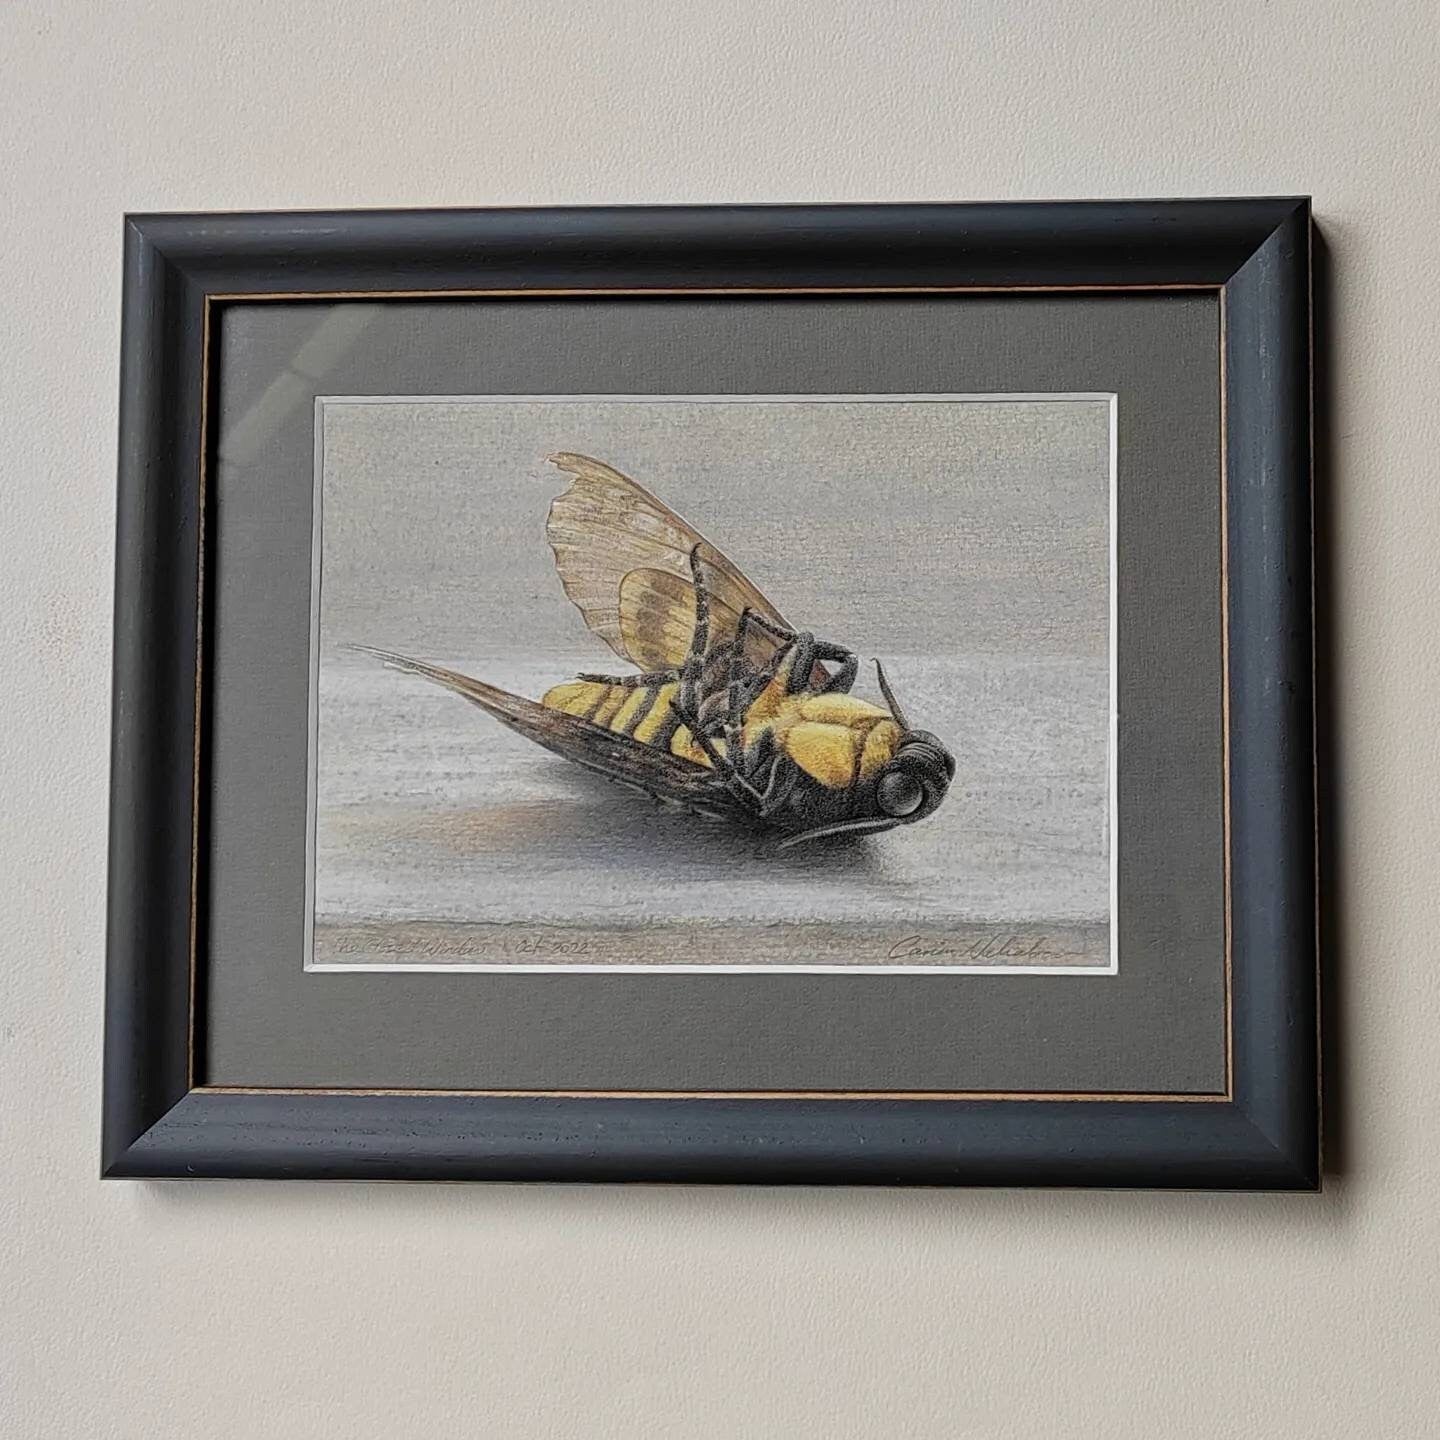 Framed Original Artwork - The Closed Window. Acherontia atropos, Death's Head Hawk Moth